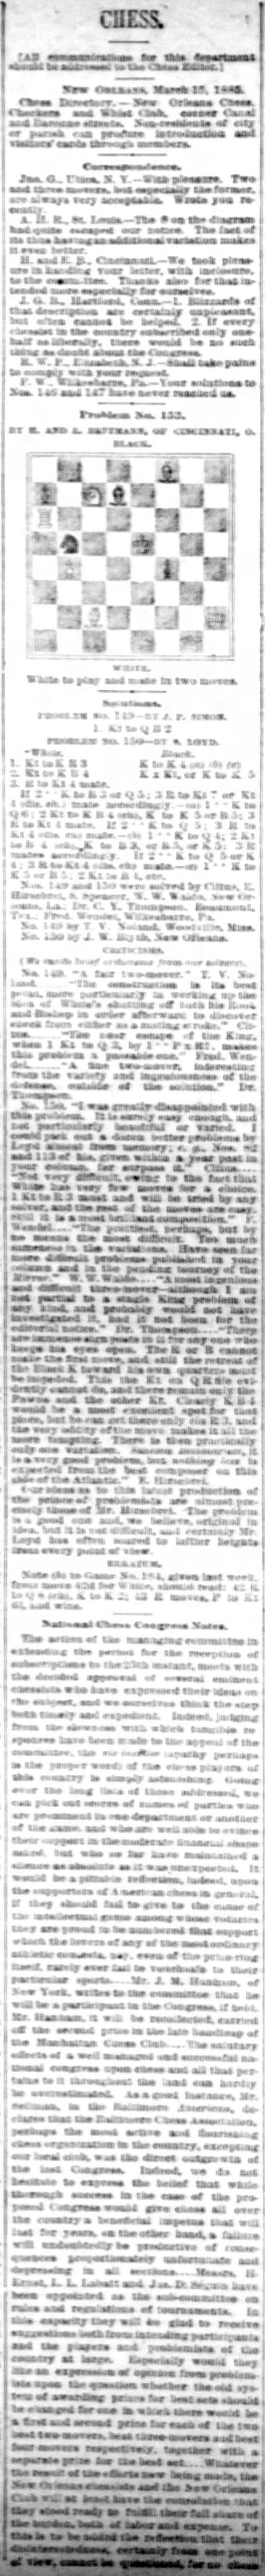 1885.03.15-01 New Orleans Times-Democrat.jpg